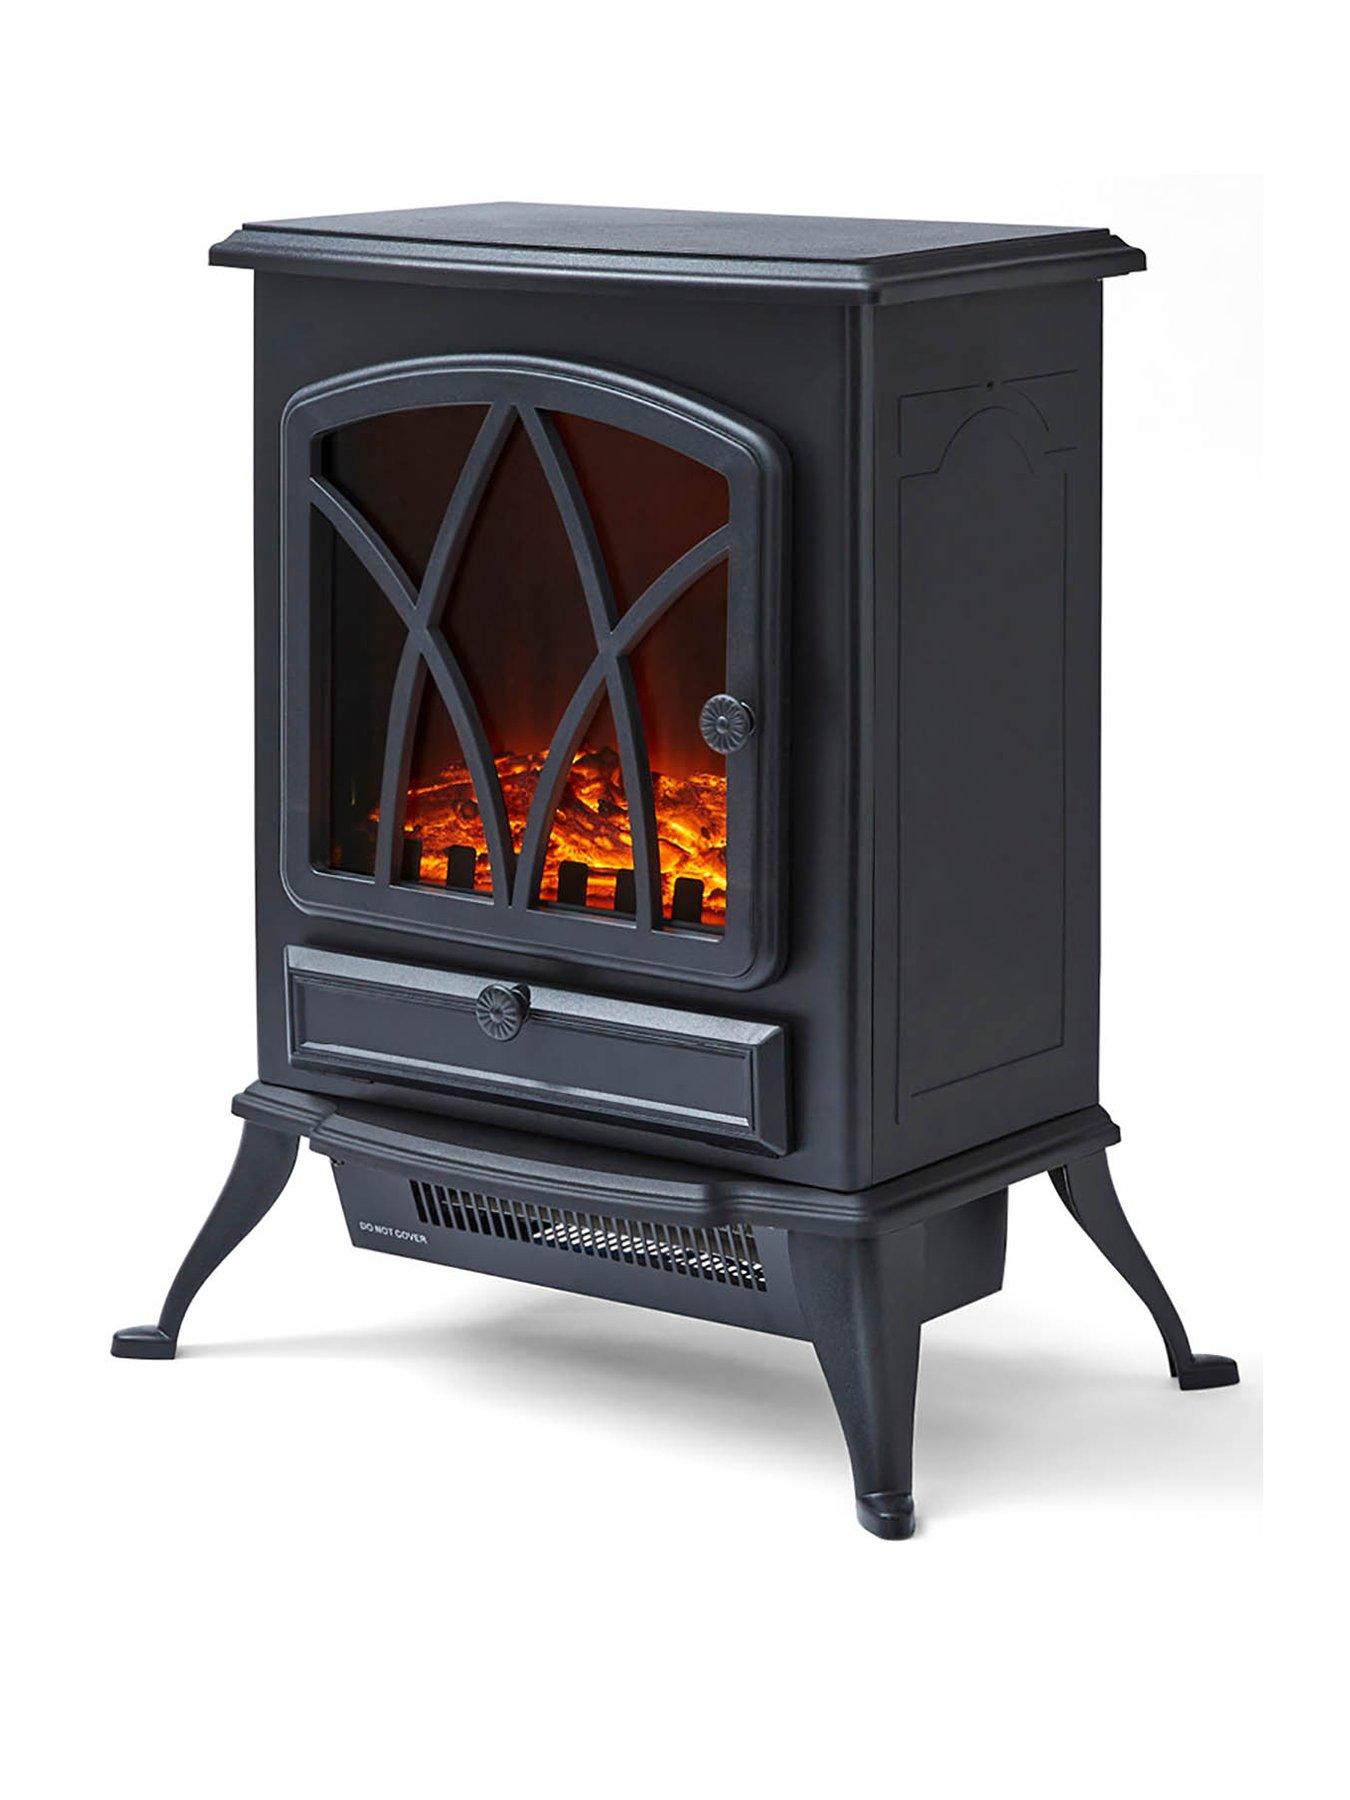 Warmlite Electric Stove Heater - Black